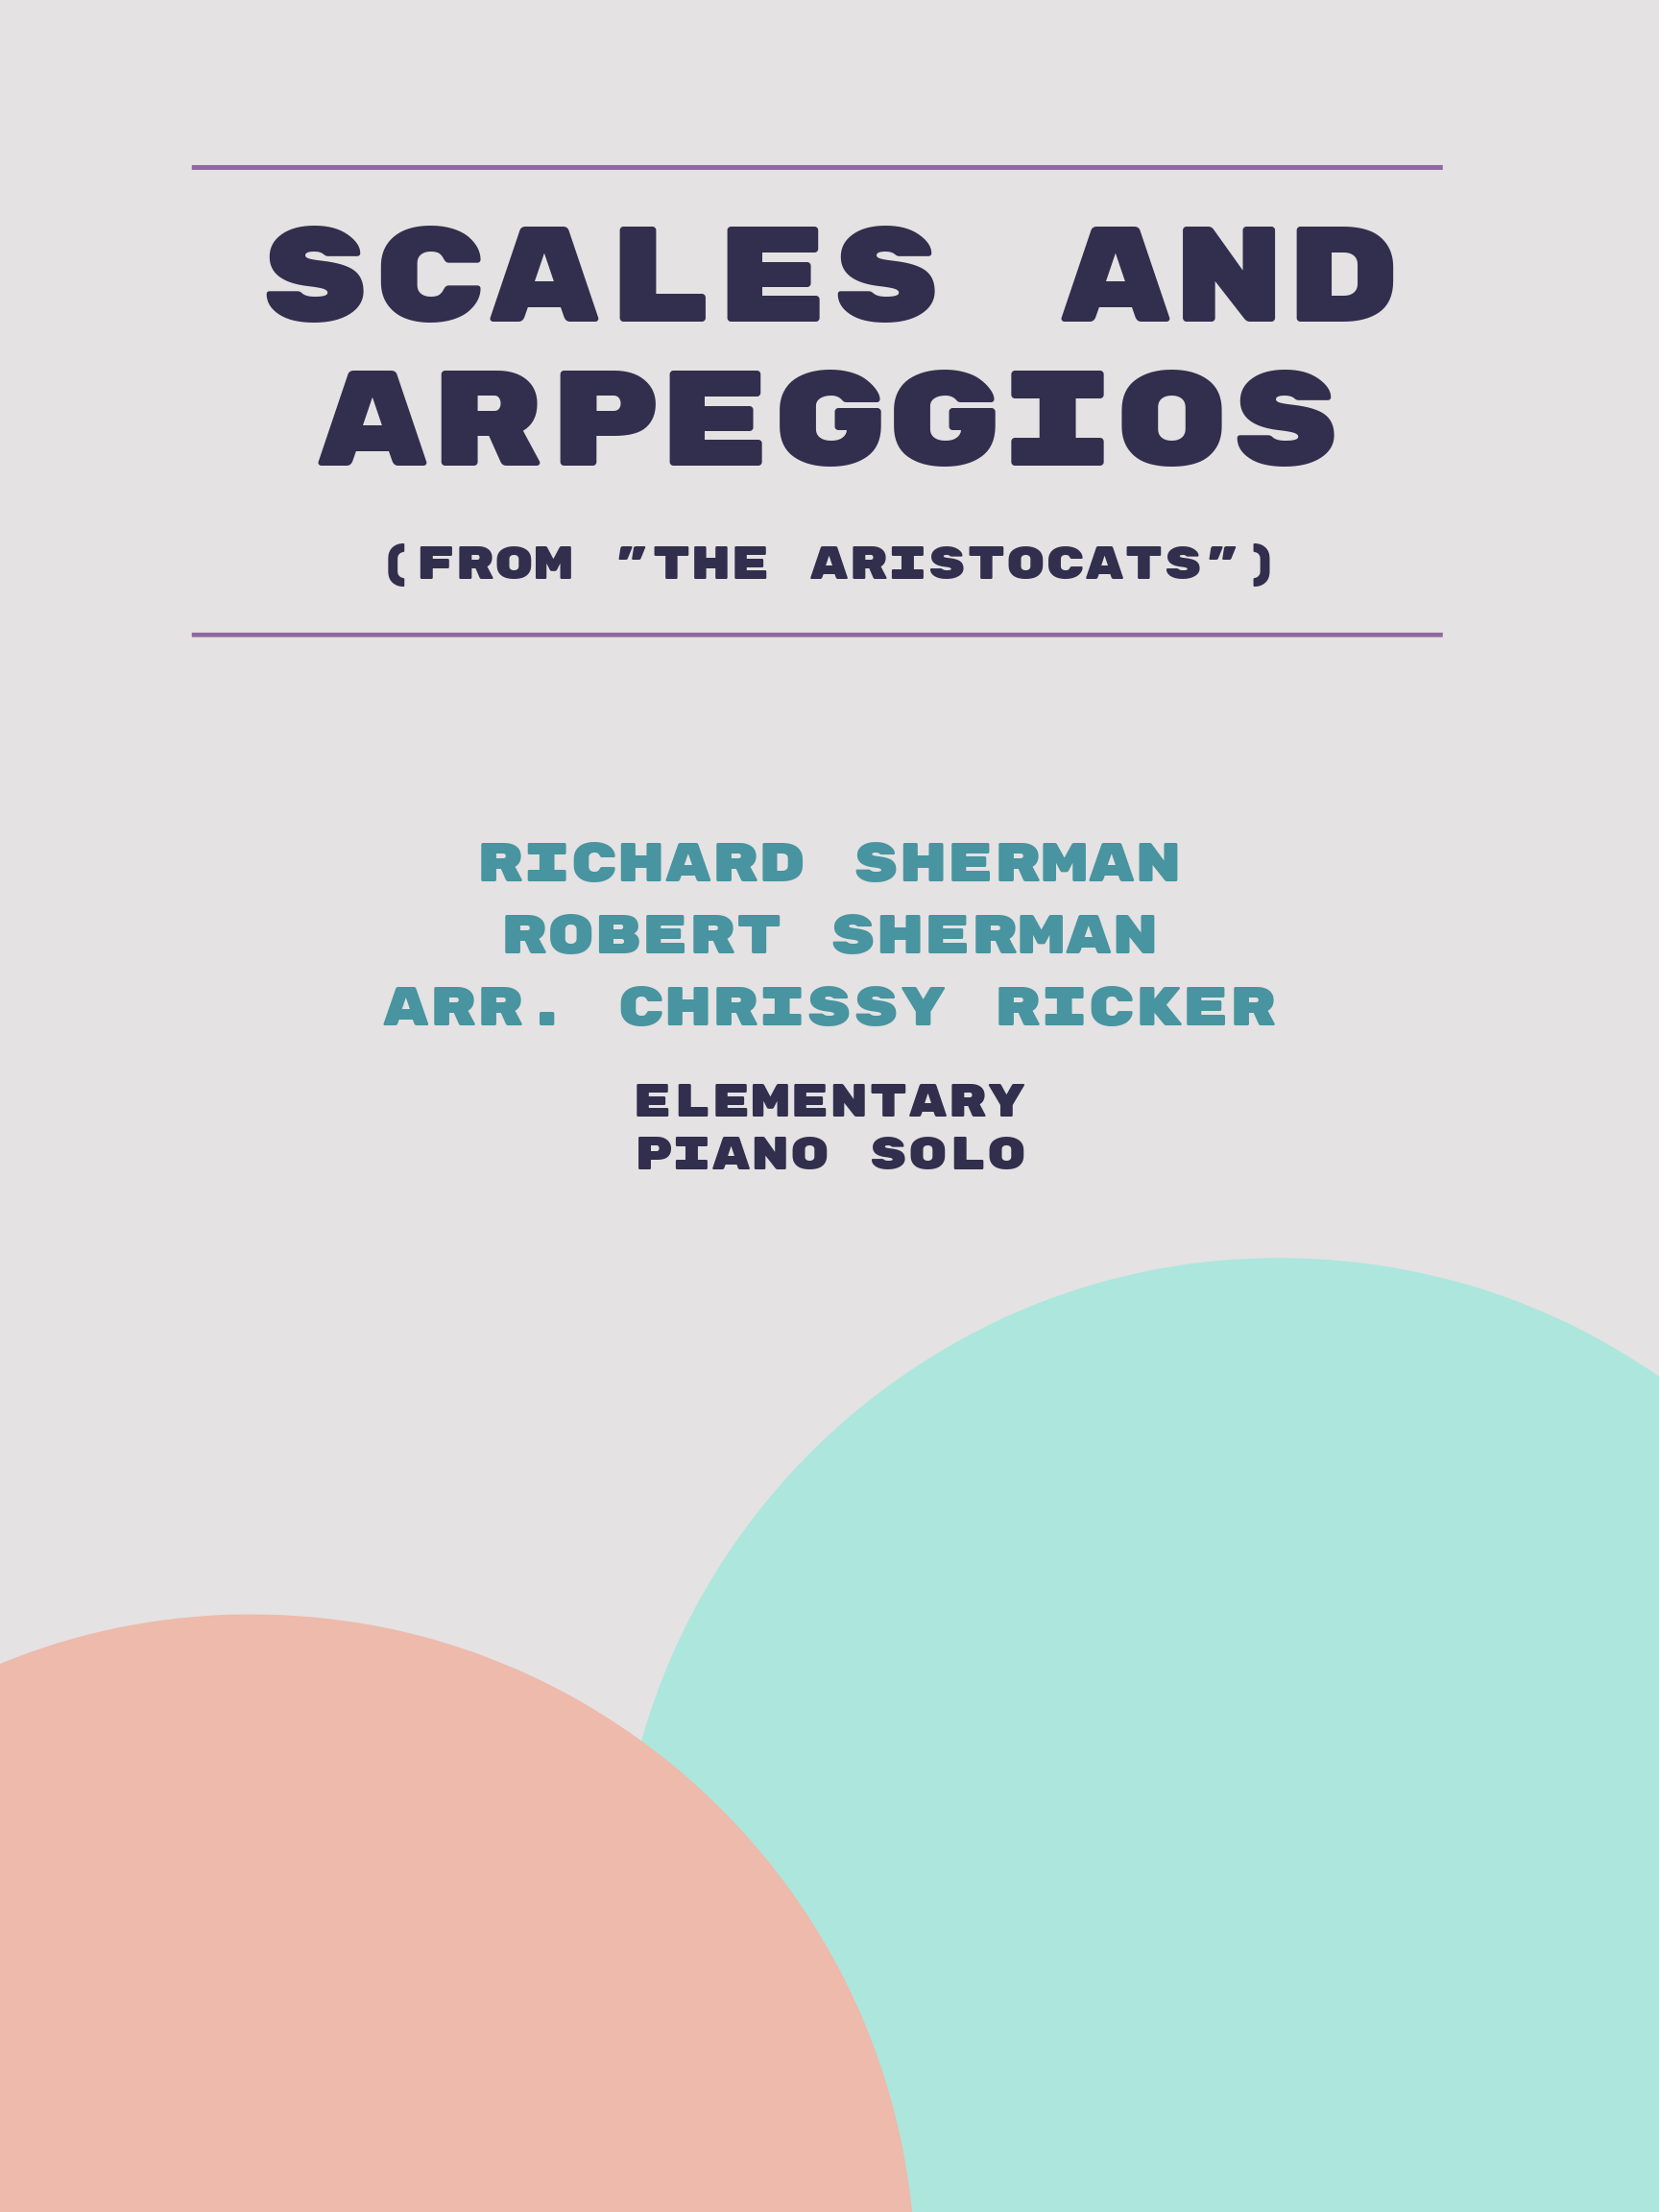 Scales and Arpeggios by Richard Sherman, Robert Sherman